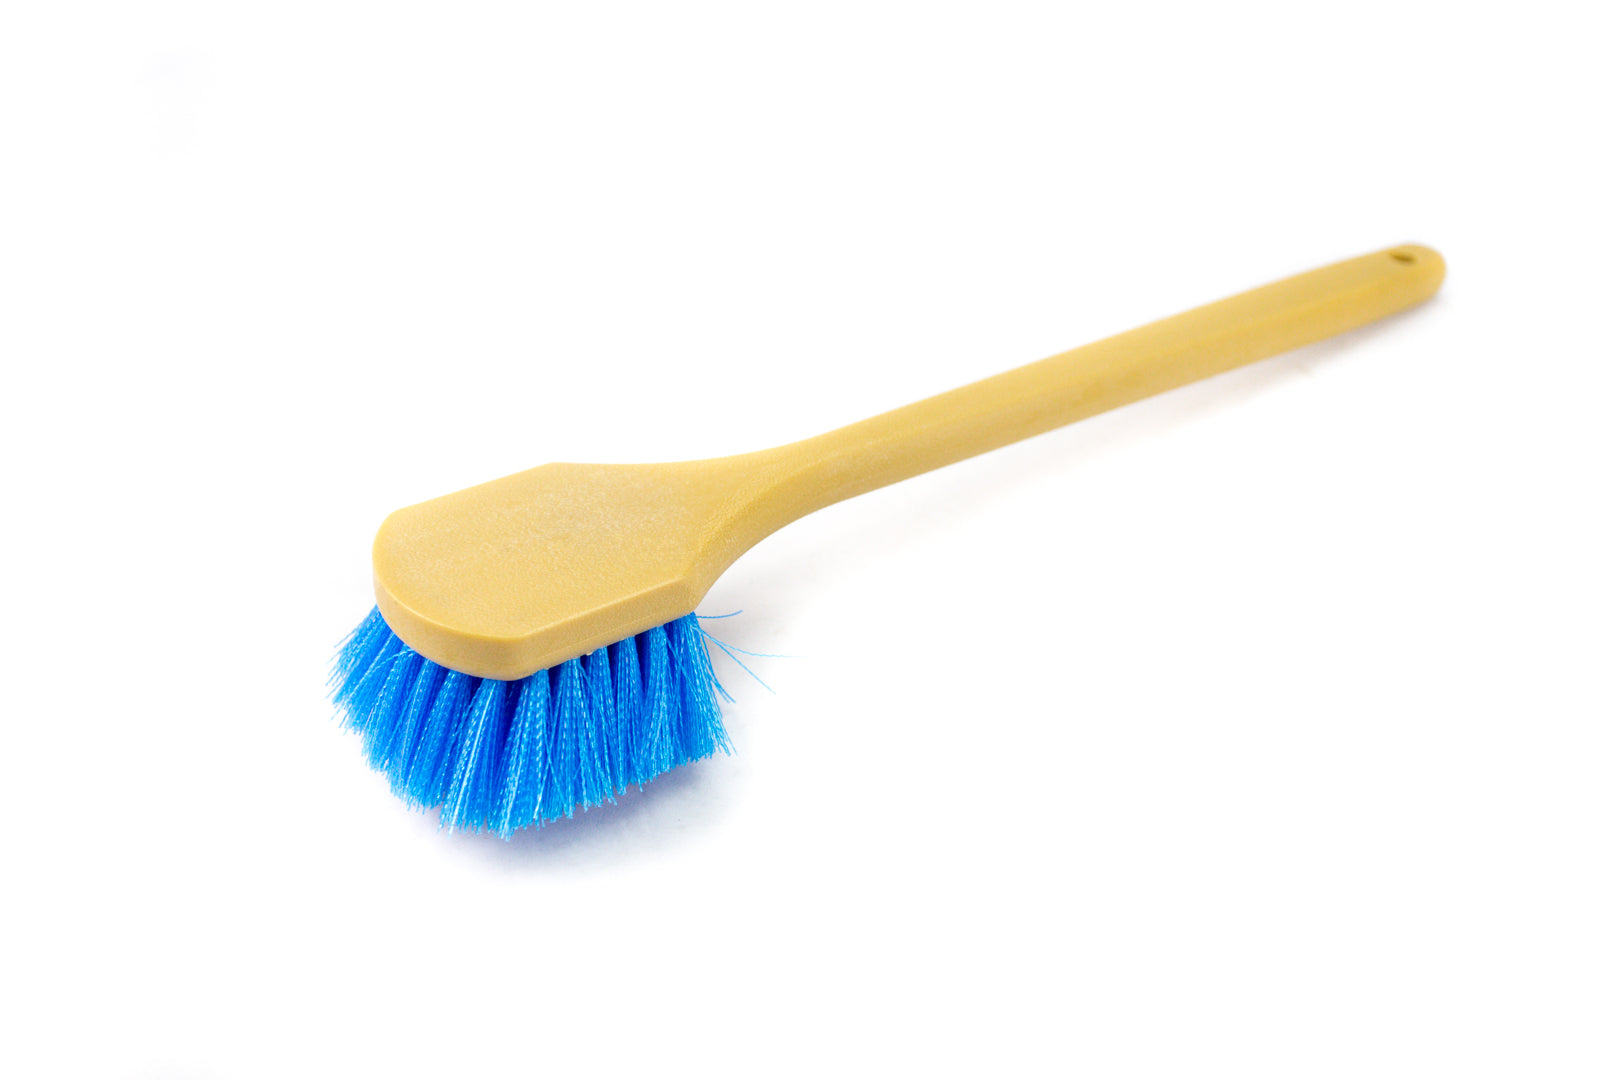 Soft Bristle Wheel Cleaning Brush Long Handle Washing Brush For